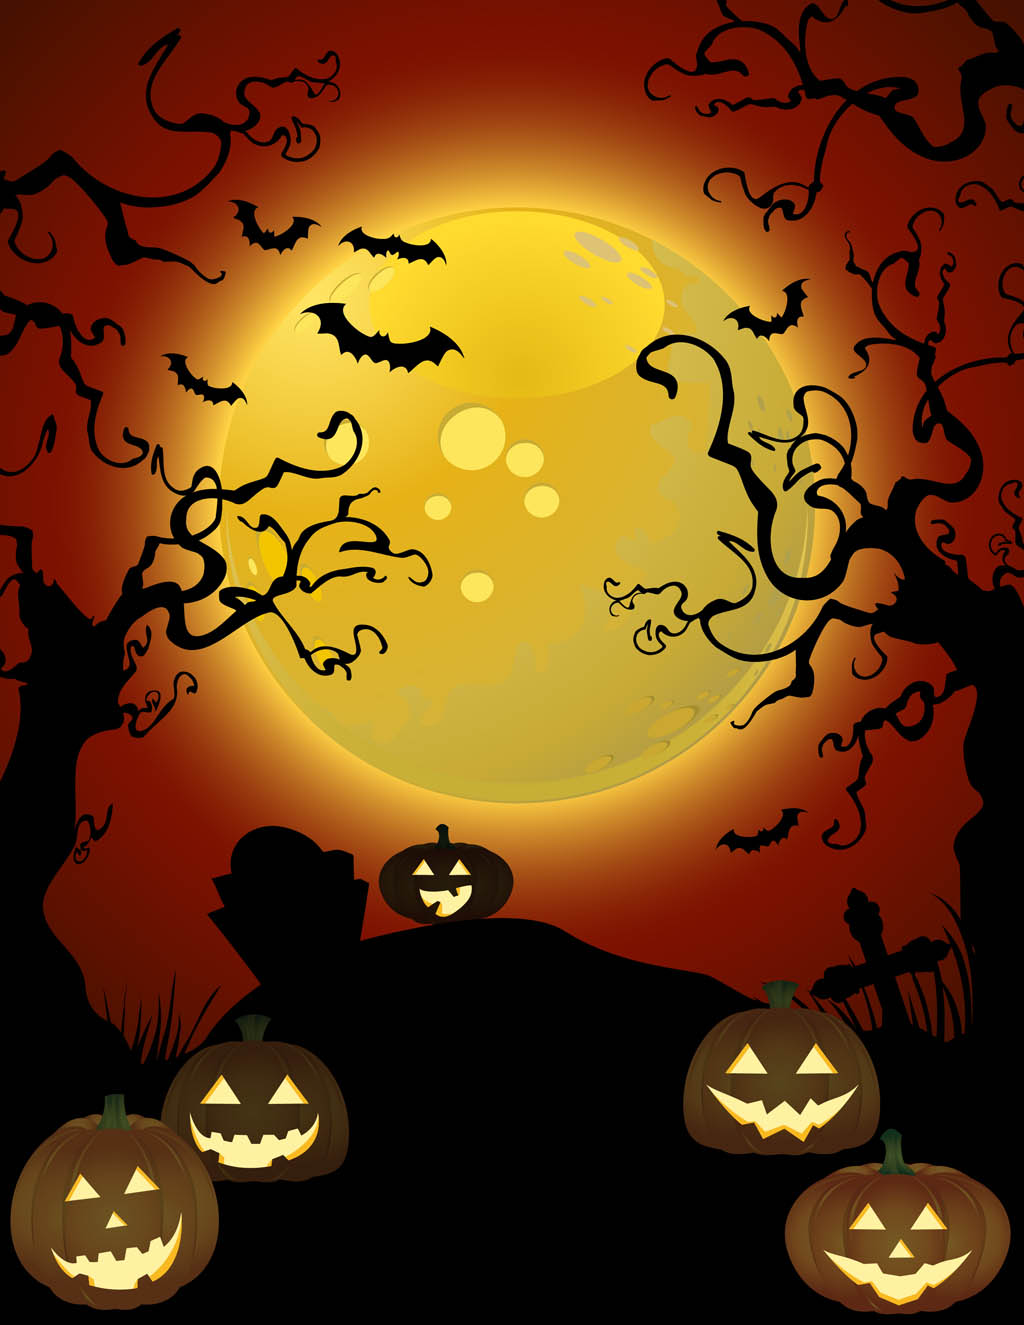 Halloween Night Poster